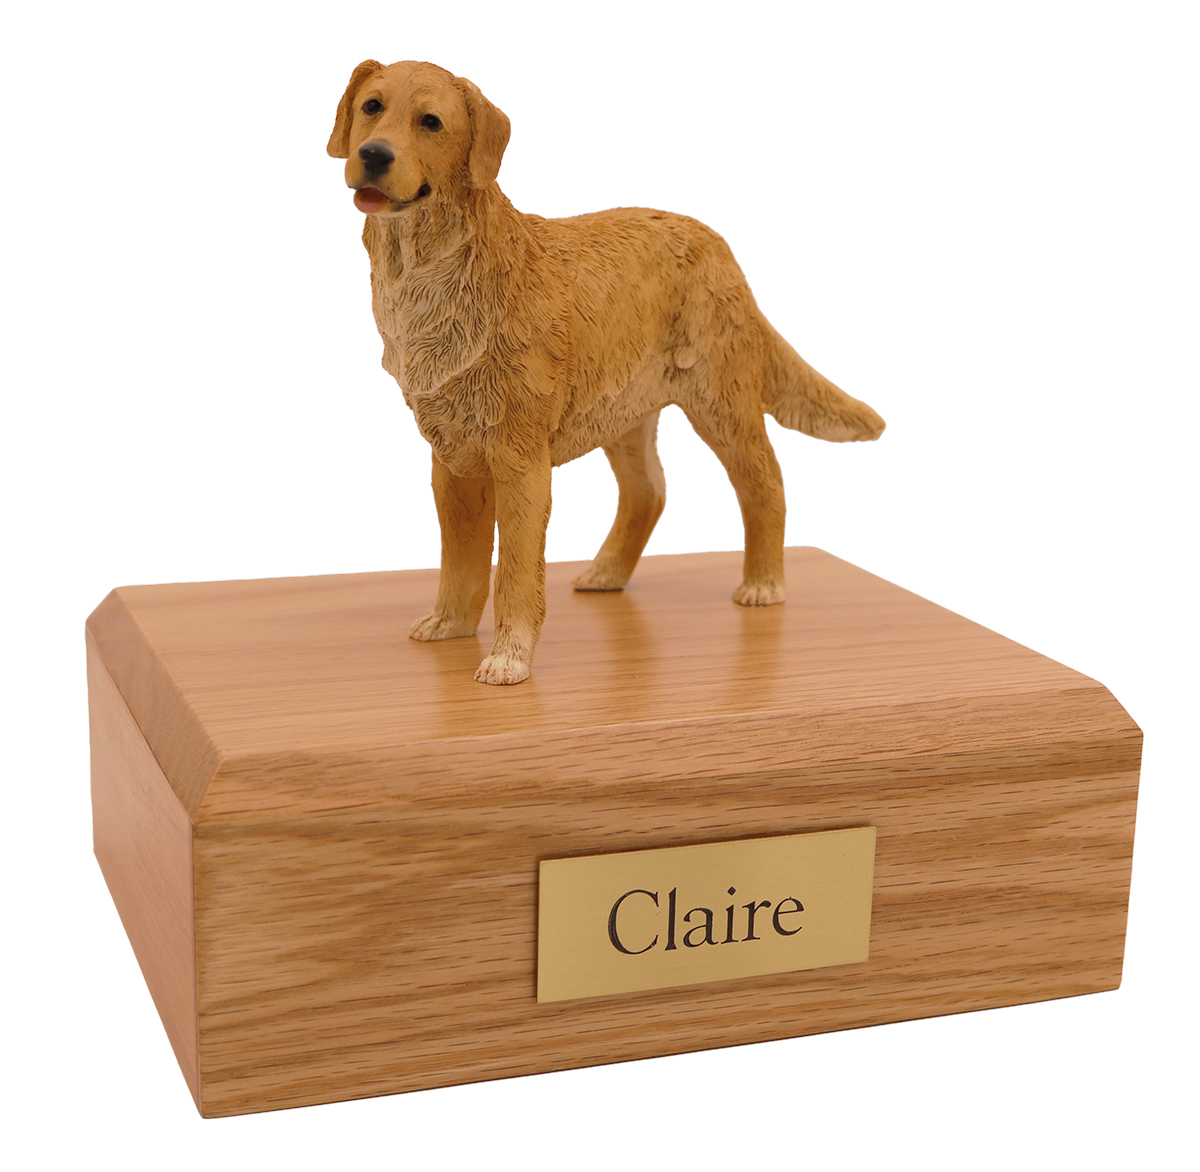 Dog, Golden Retriever, Standing - Figurine Urn